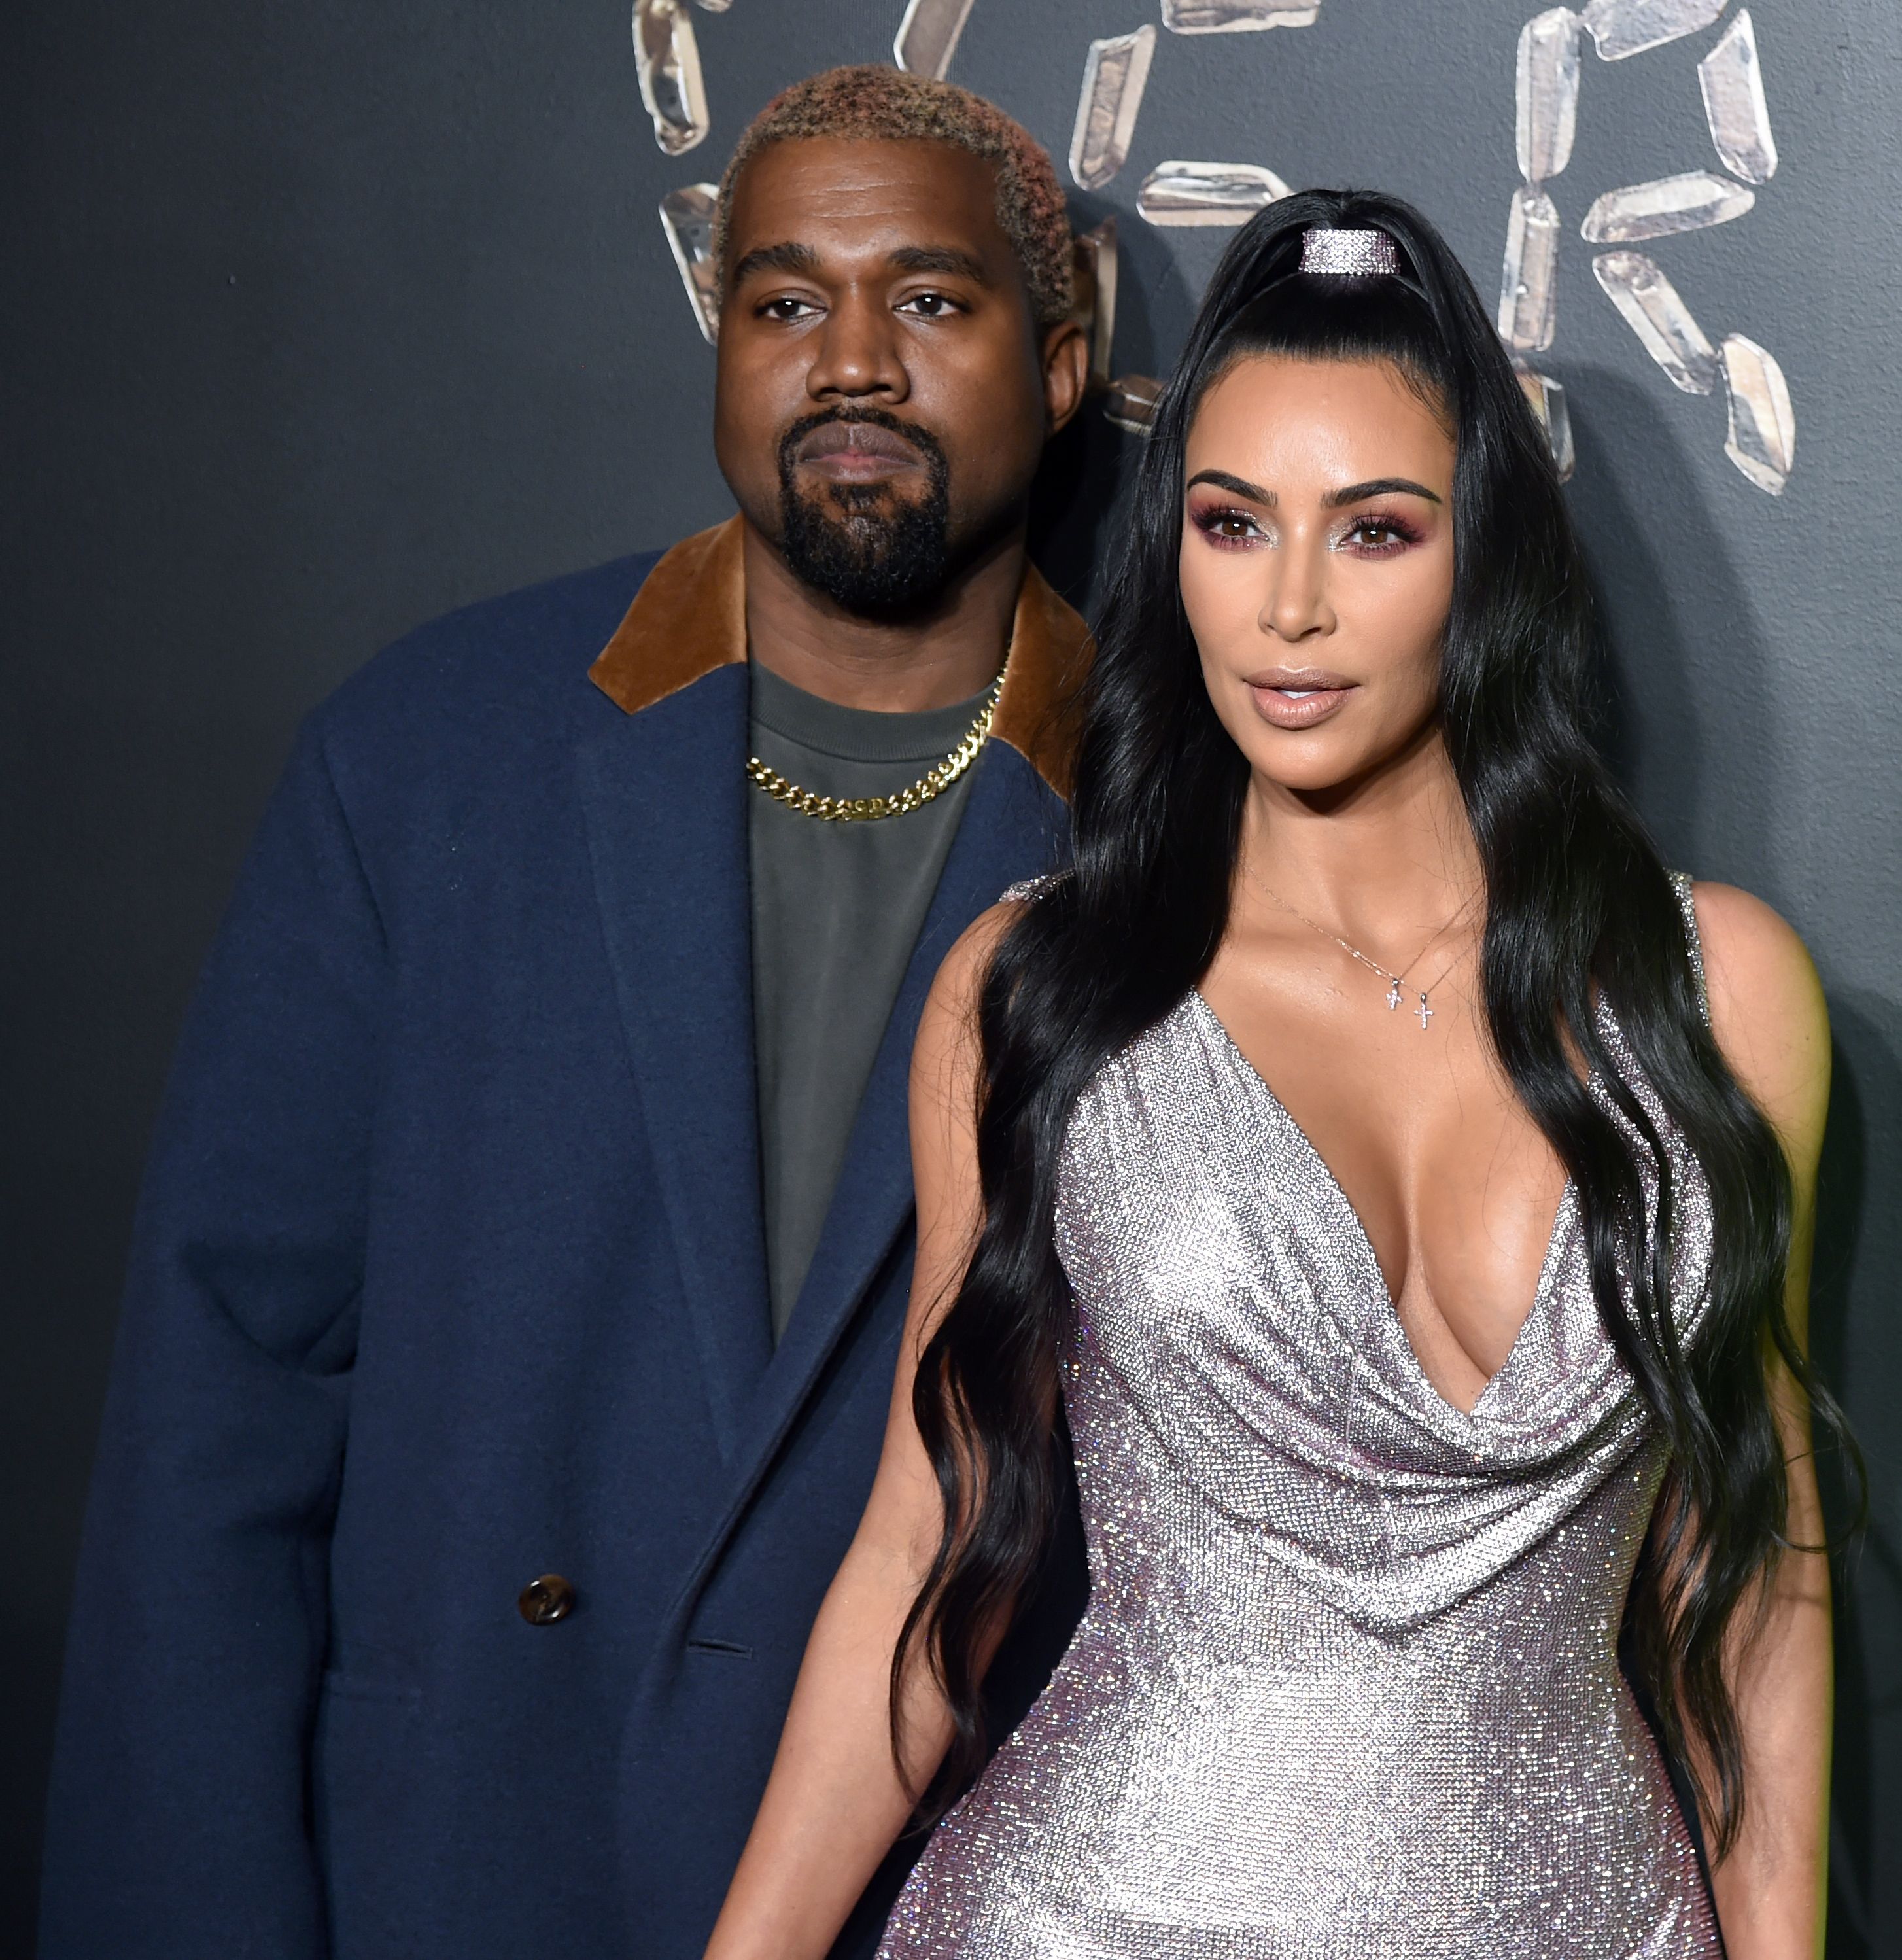 Kanye West Describes His 'Attraction' When He Met Kim Kardashian